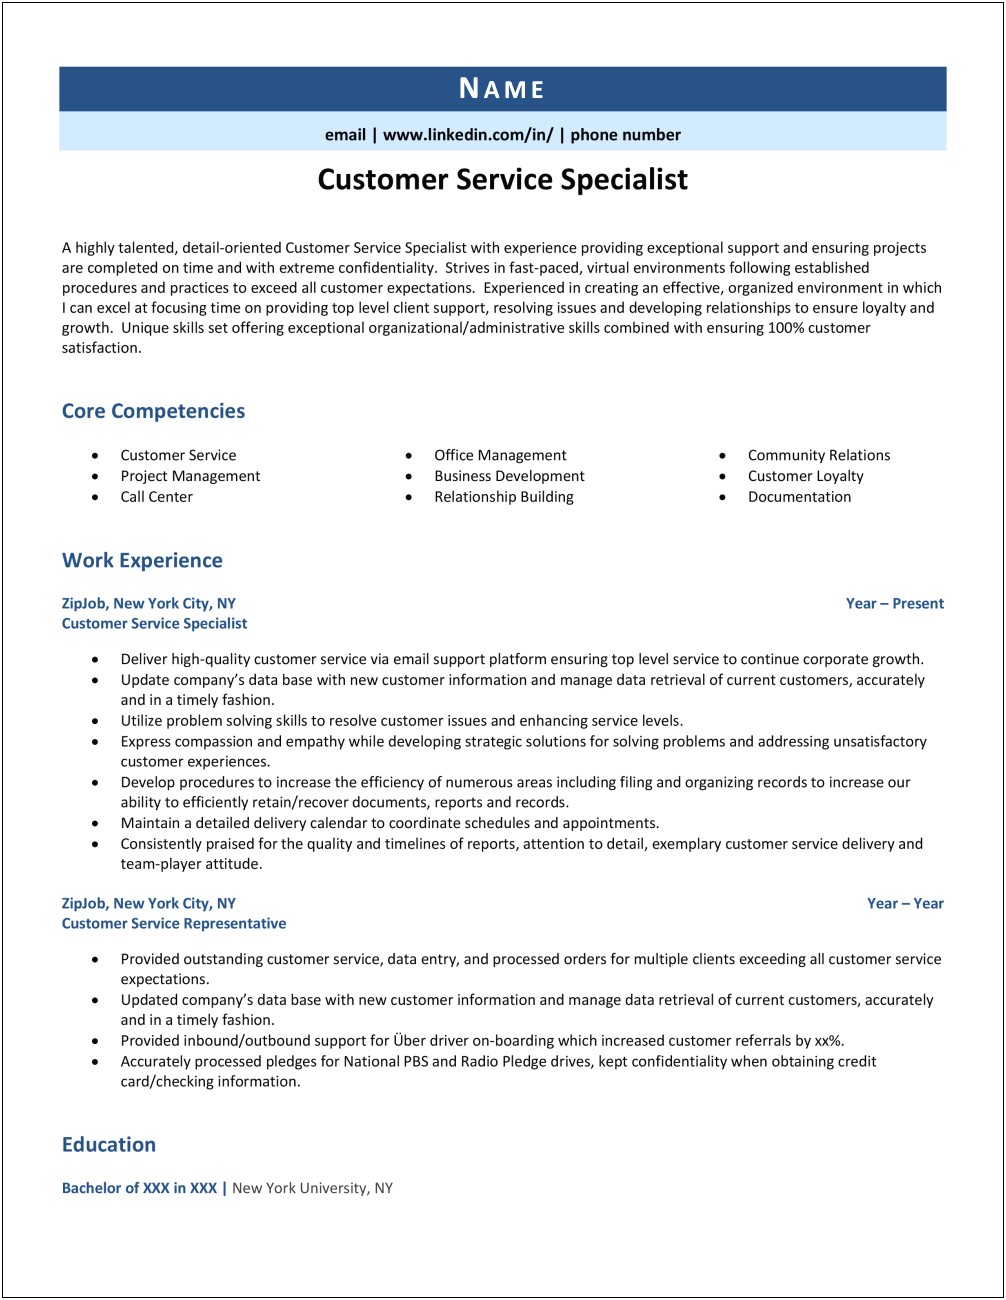 Customer Service Specialist Jcpenney Description Resume